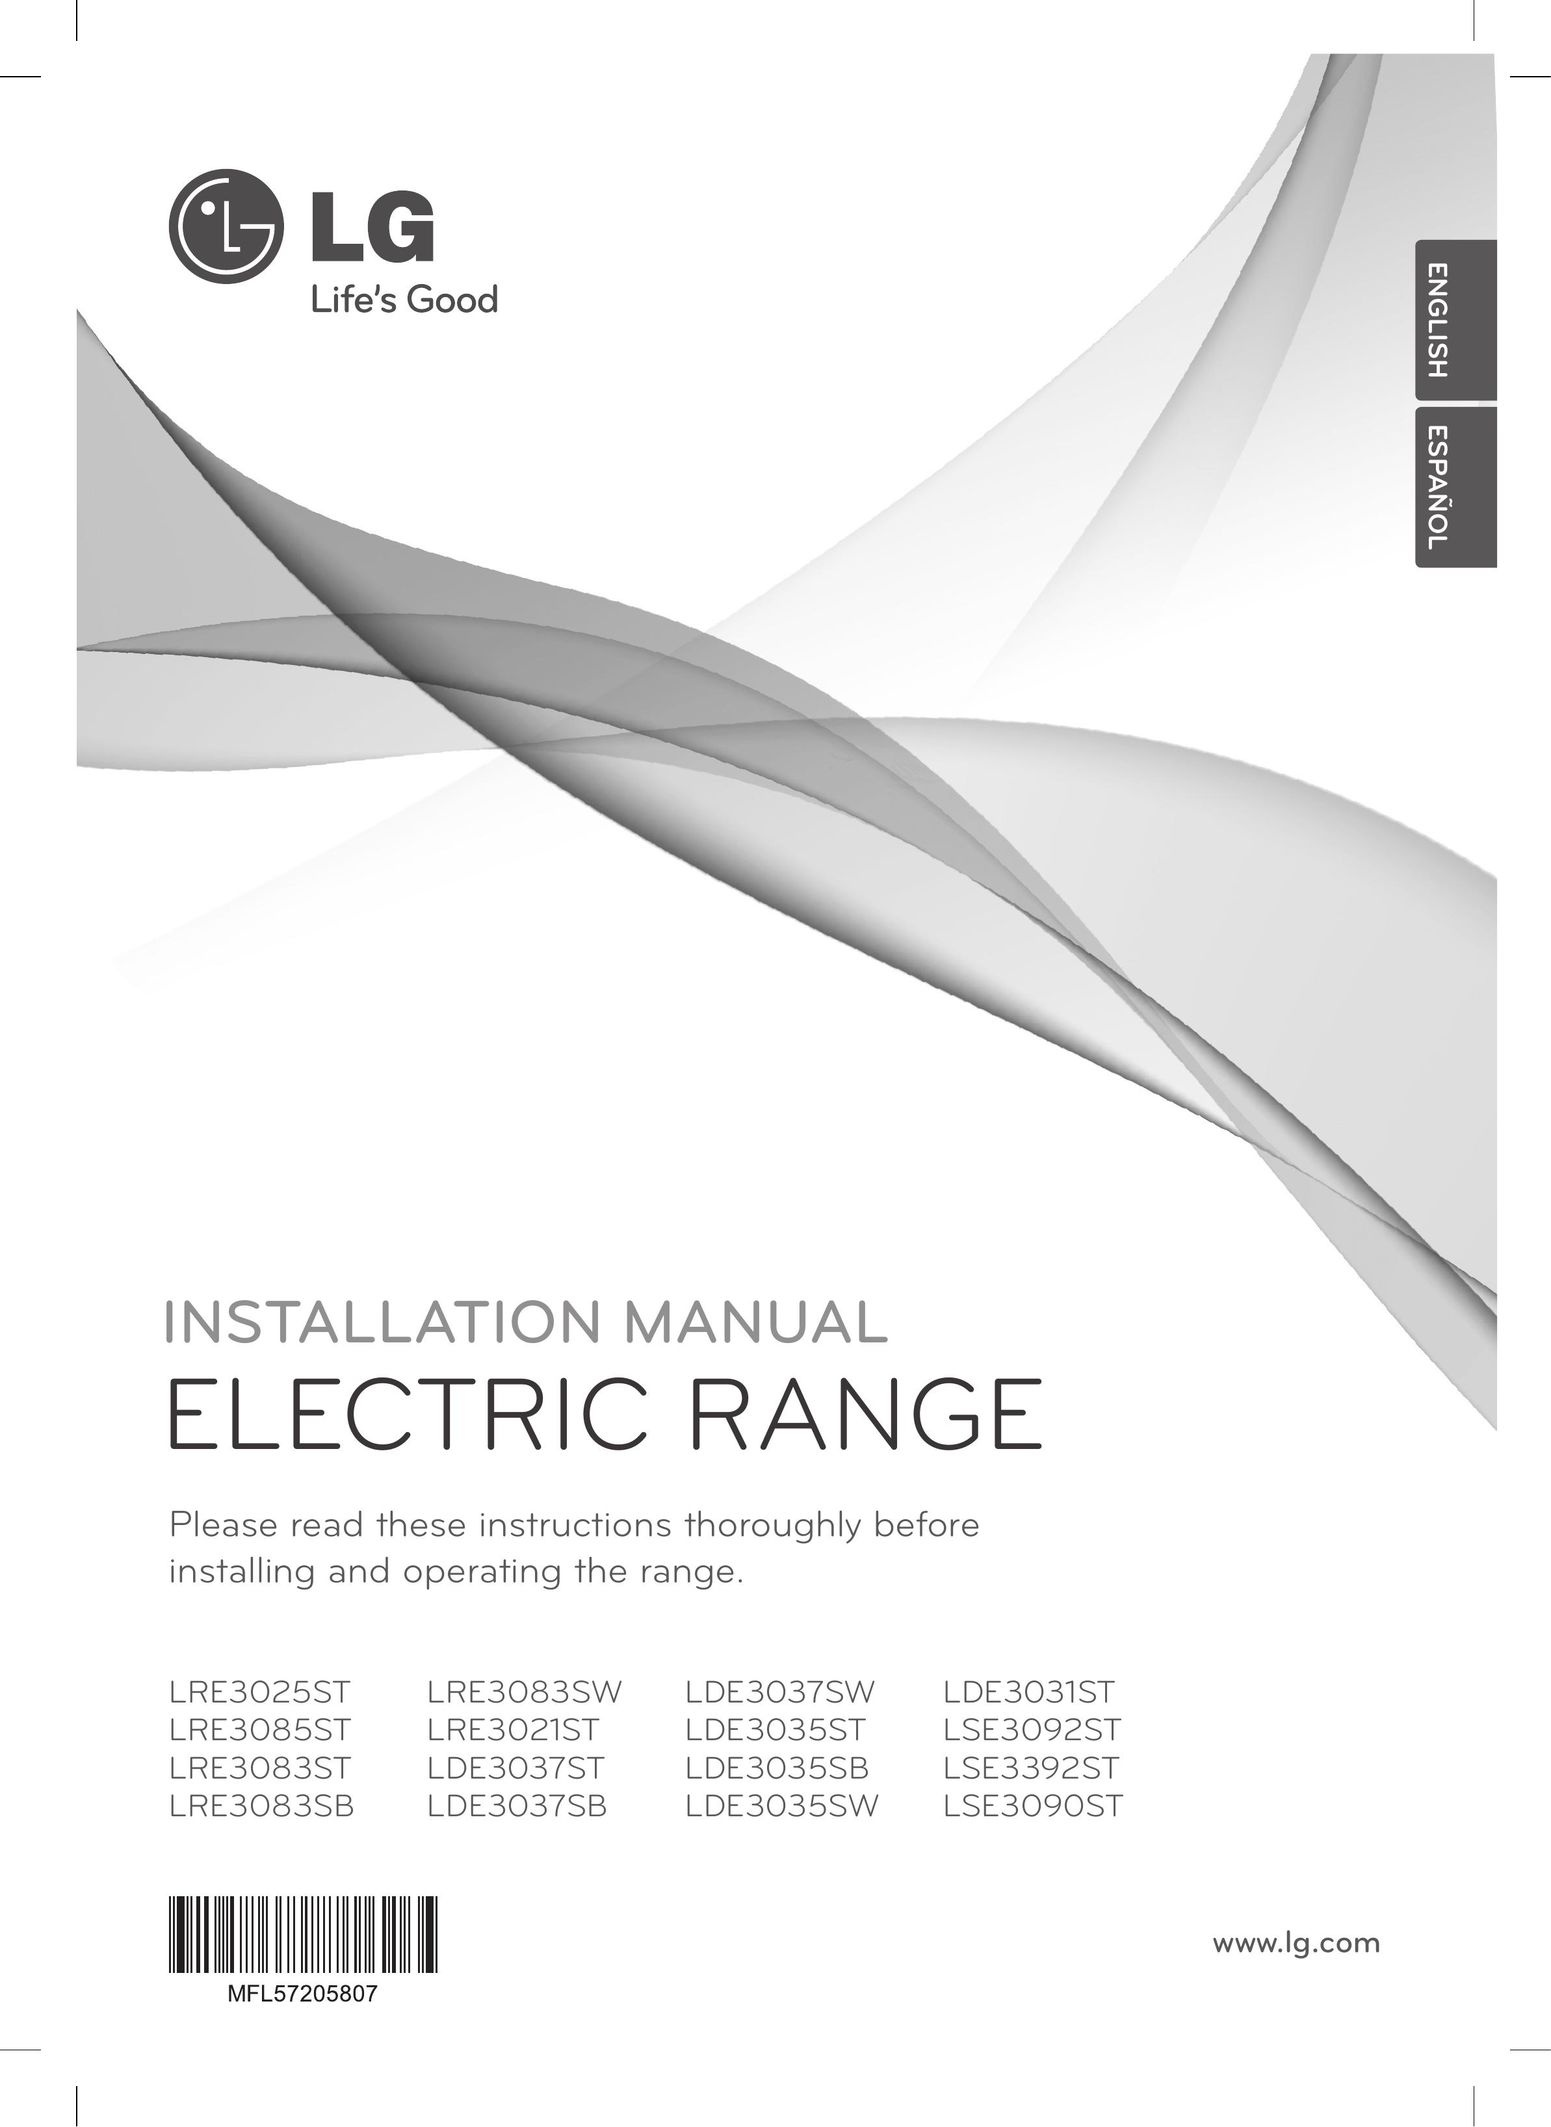 LG Electronics LDE3035ST Range User Manual